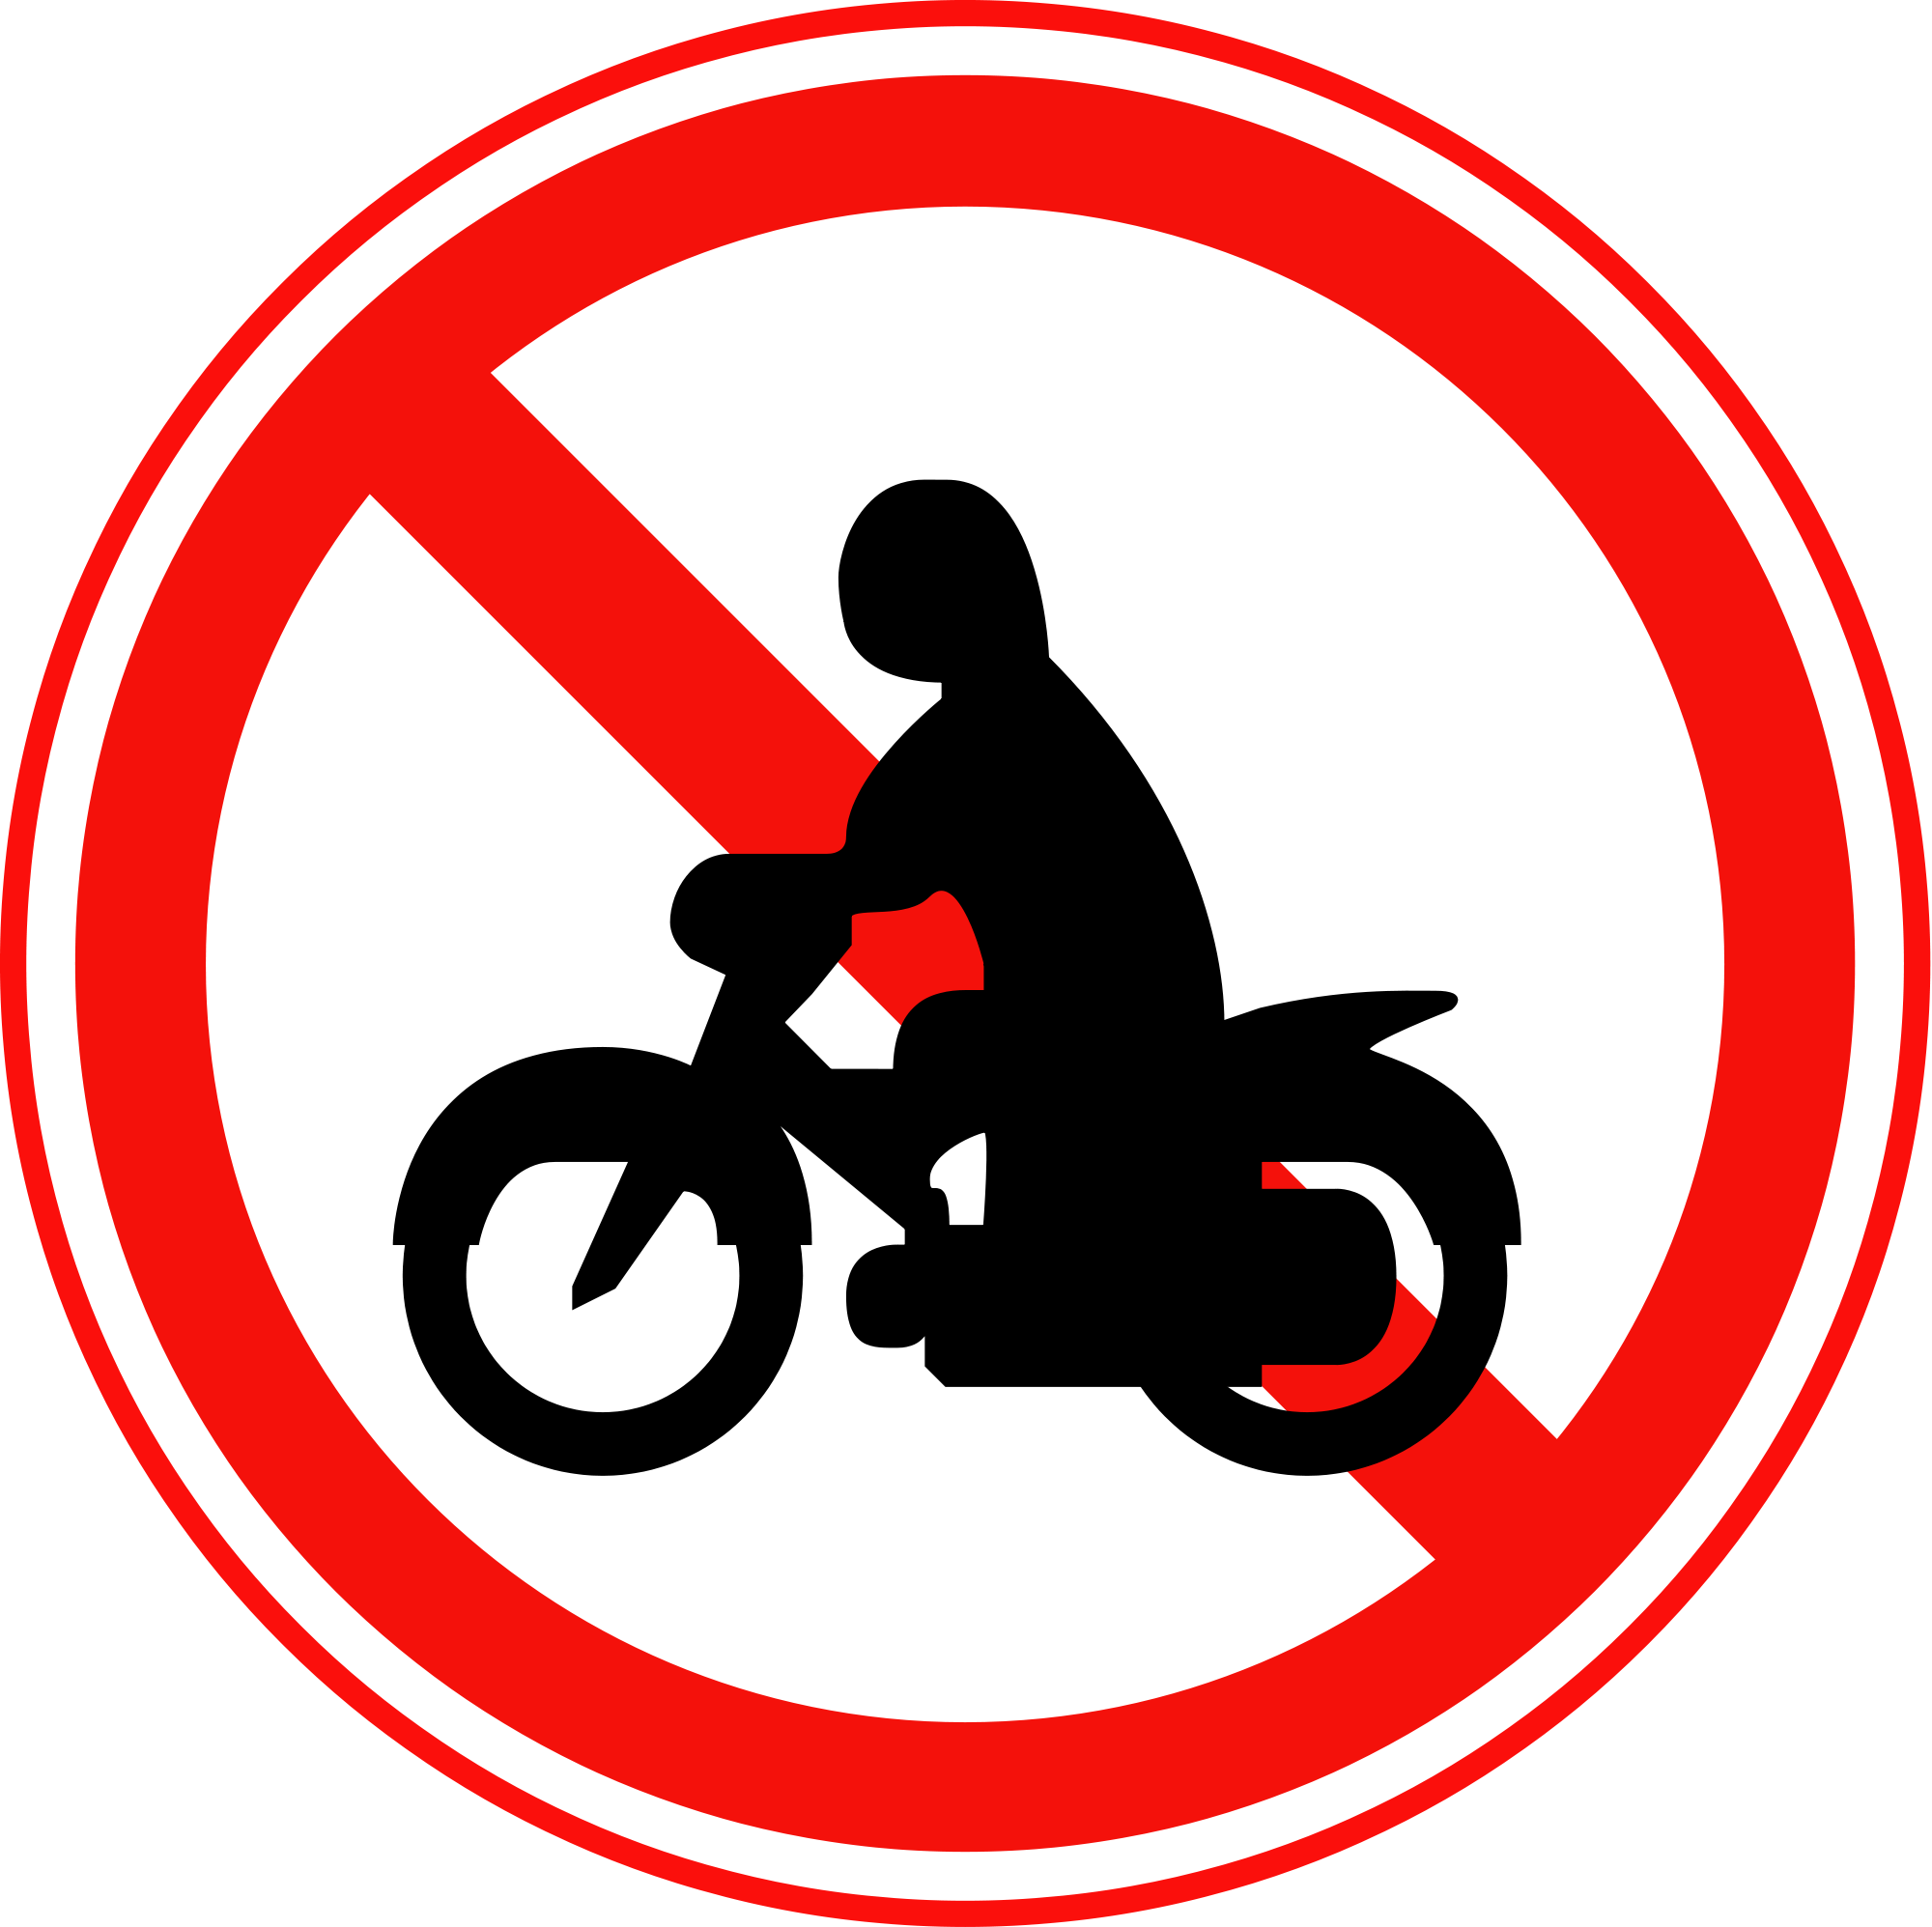 Знак мотоцикл в круге. Дорожный знак мотоцикл. Дорожные знаки для мопедов. Дорожные знаки для мотоциклистов. Знак запрета мотоциклов.